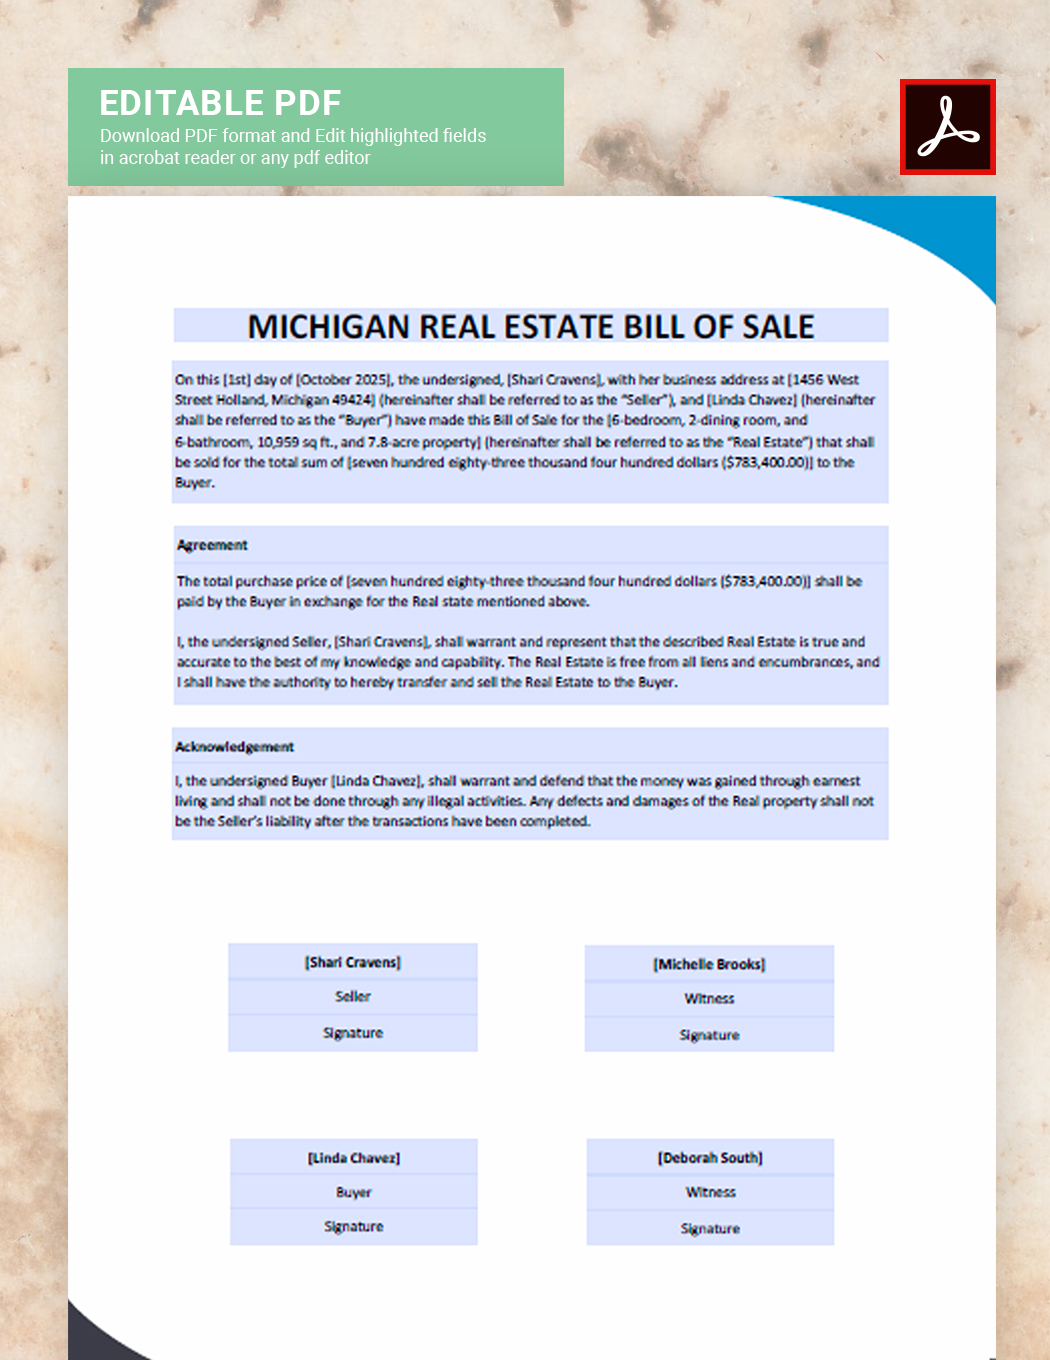 Michigan Real Estate Bill of Sale Template